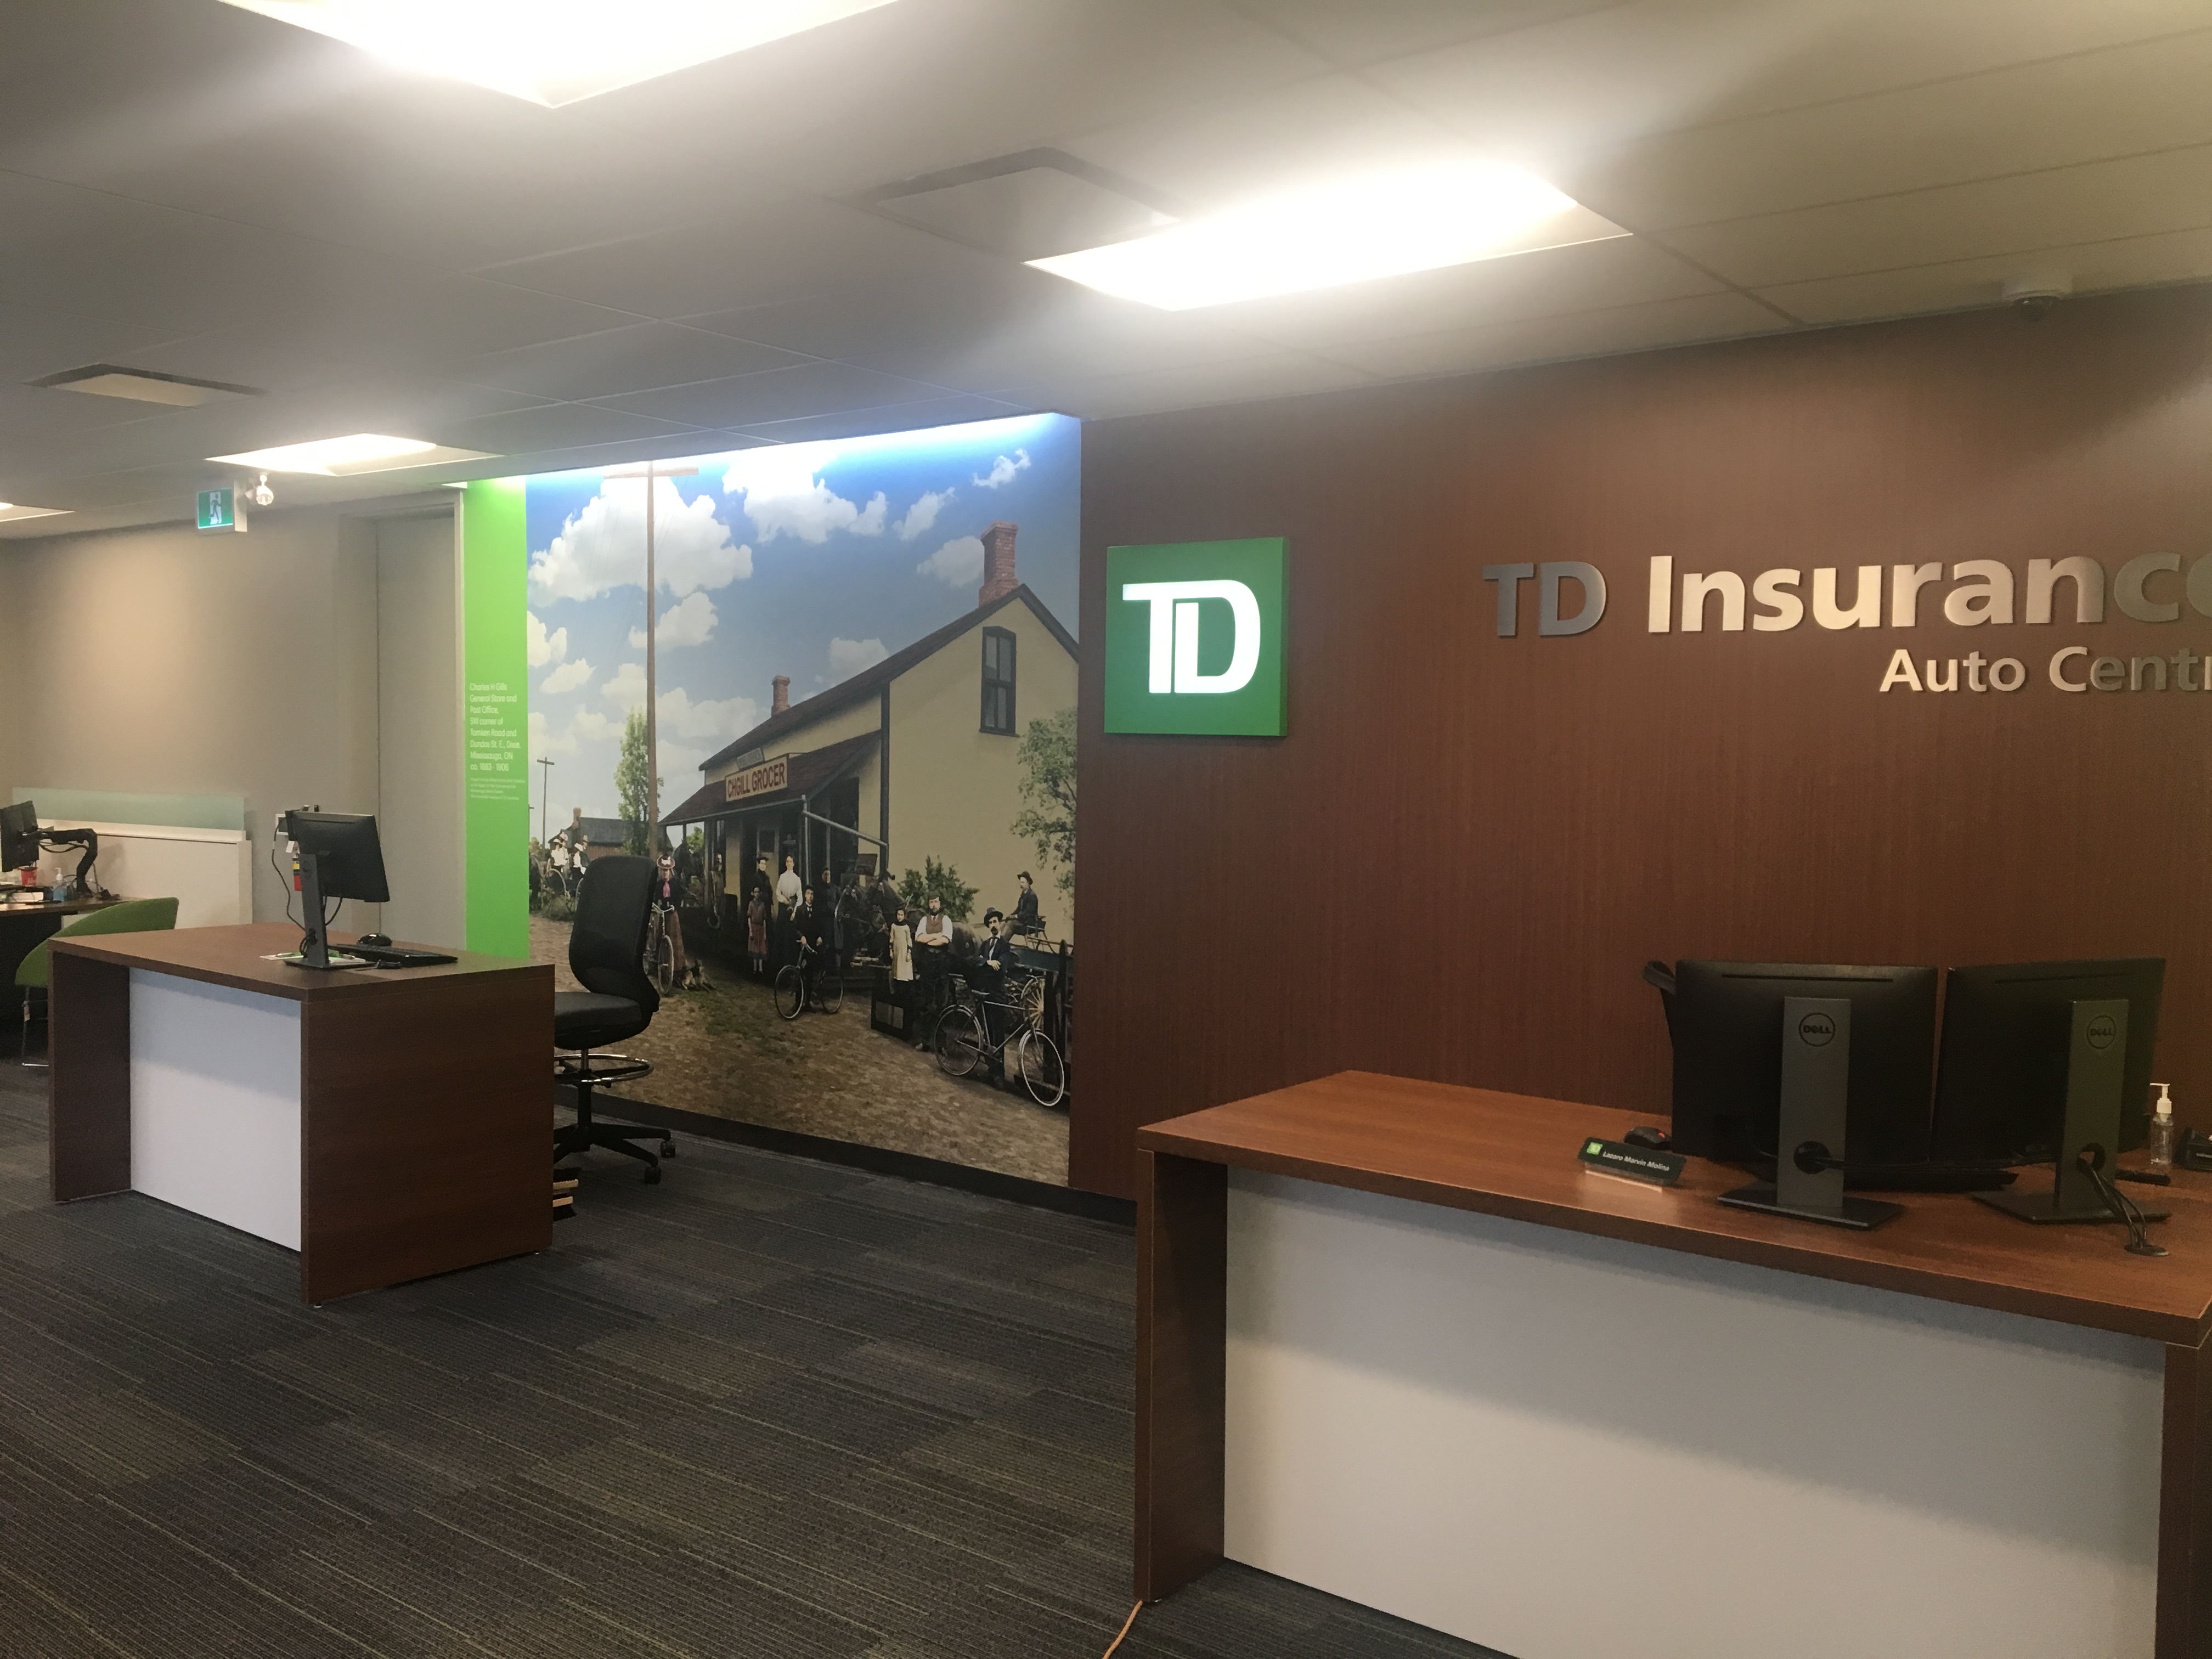 TD Insurance Auto Centre Mississauga